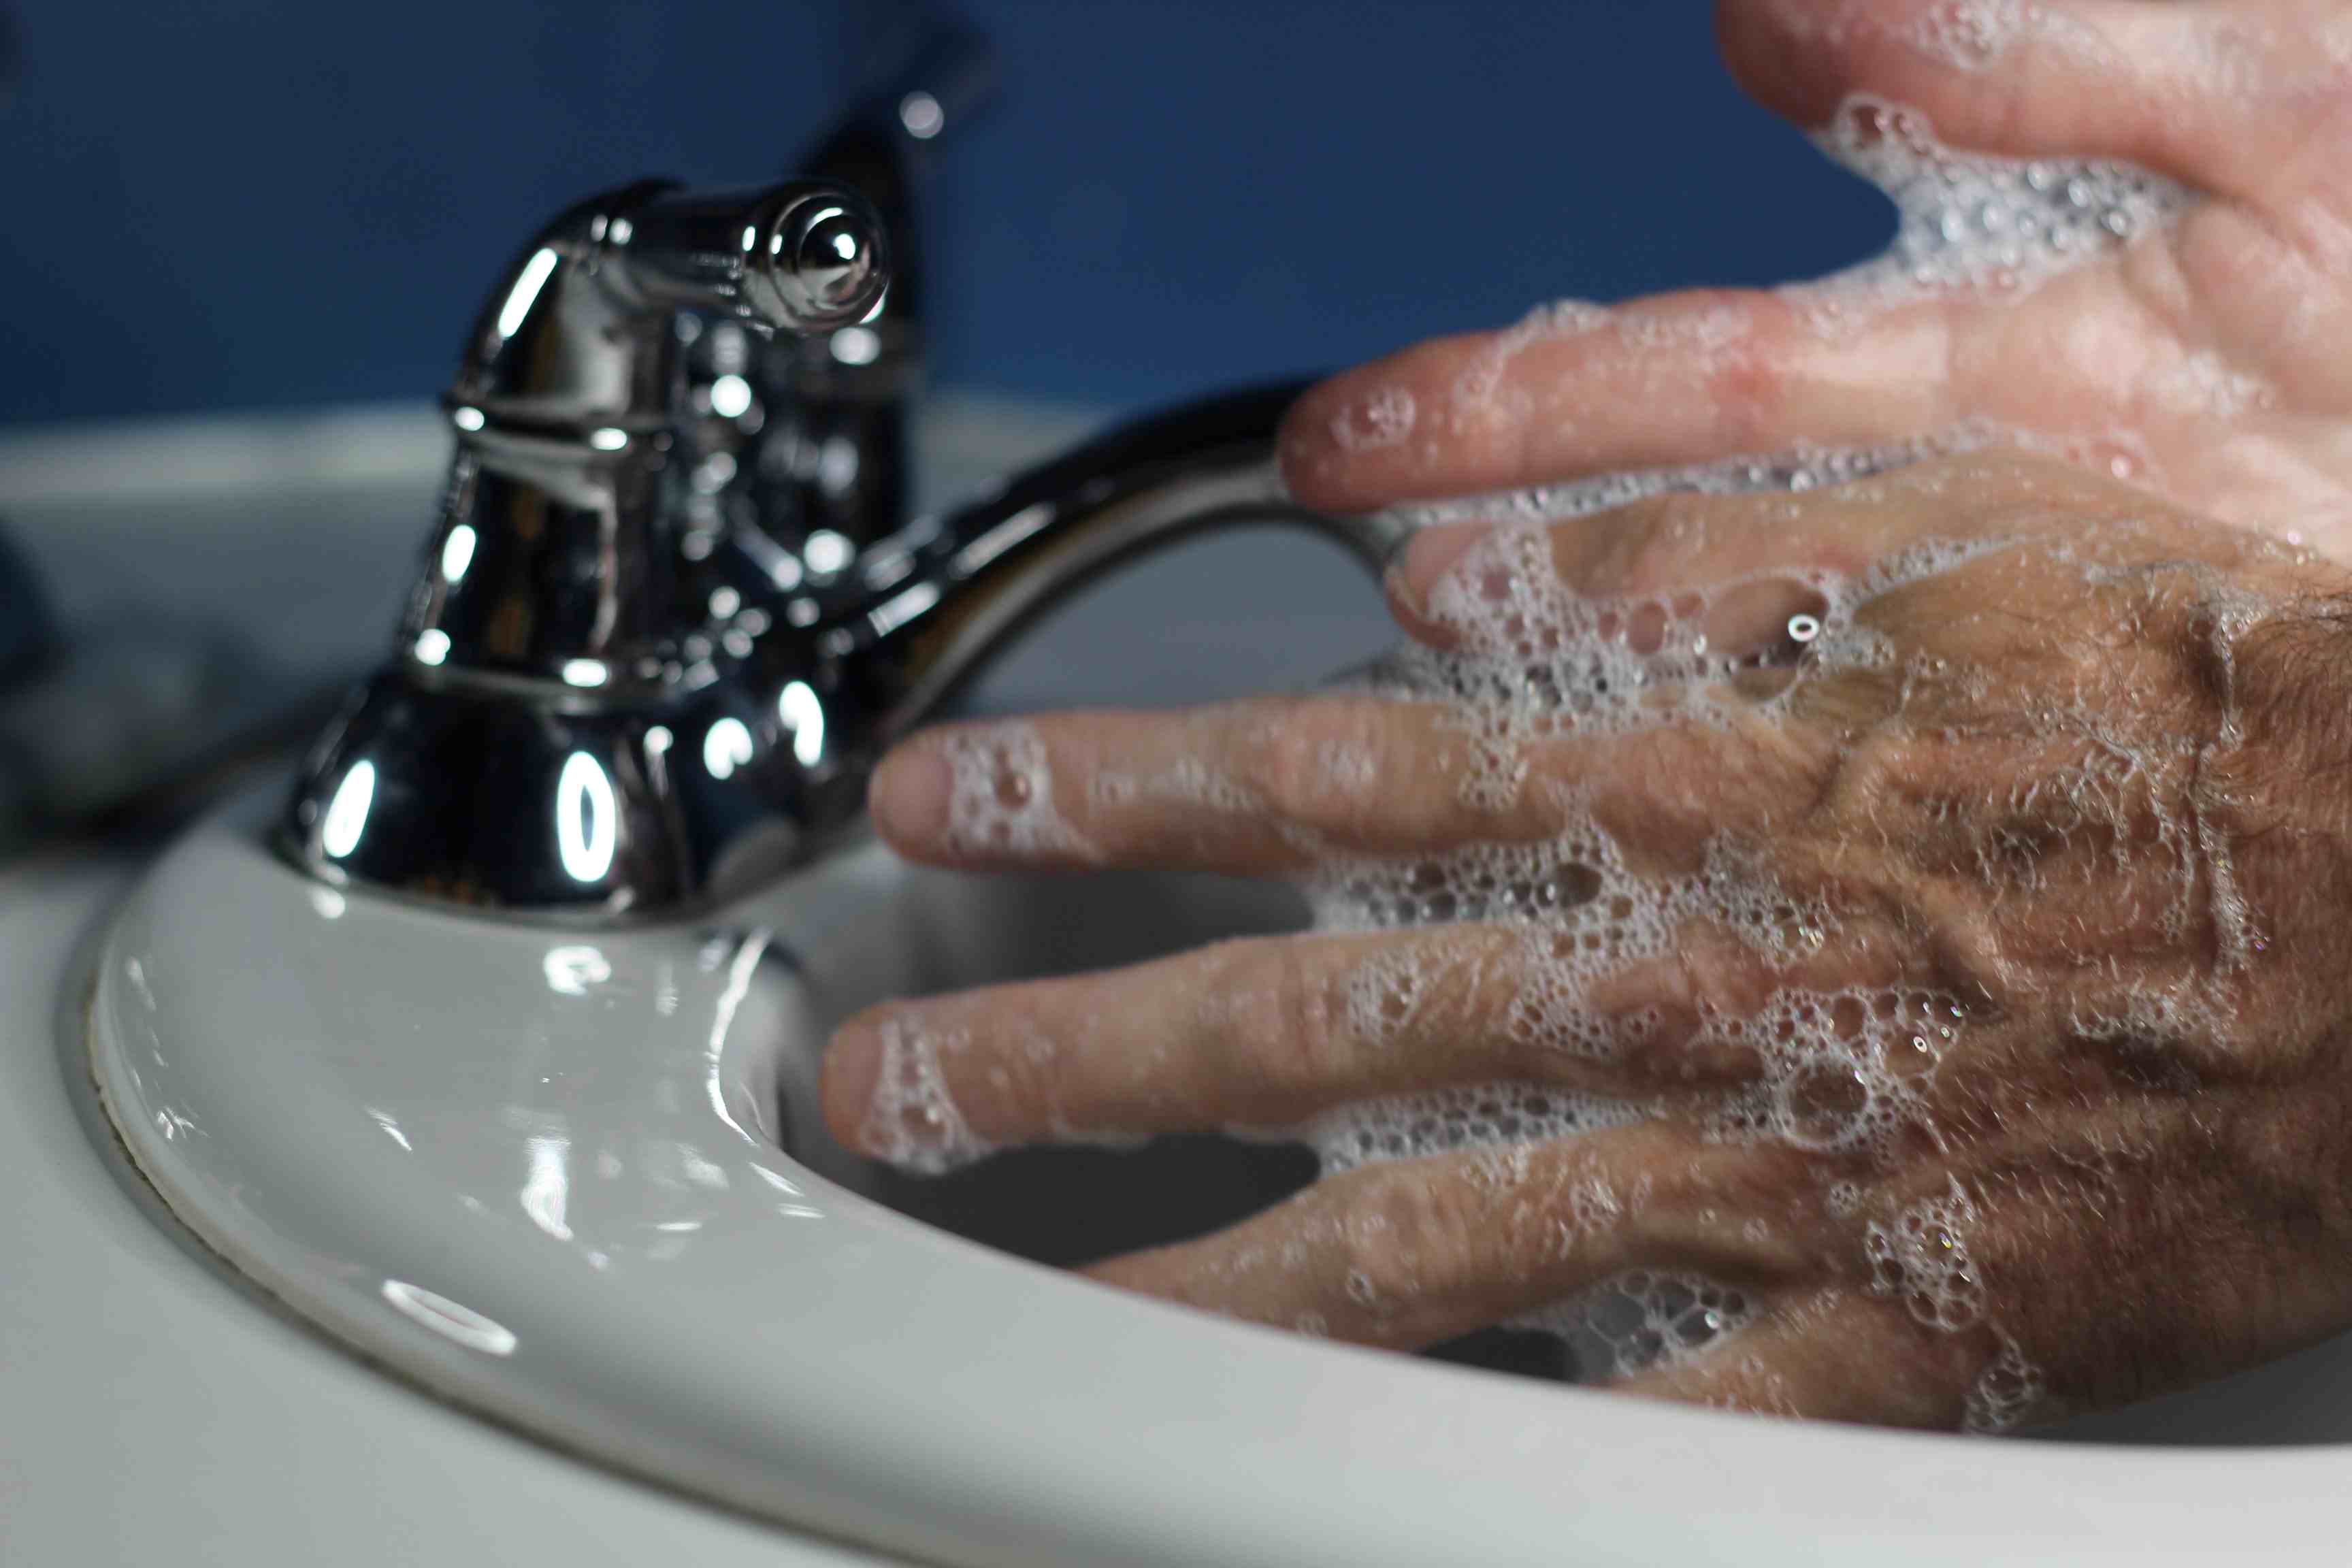 Images Wikimedia Commons/23 MarkBuckawicki Hand_washing_man.jpg